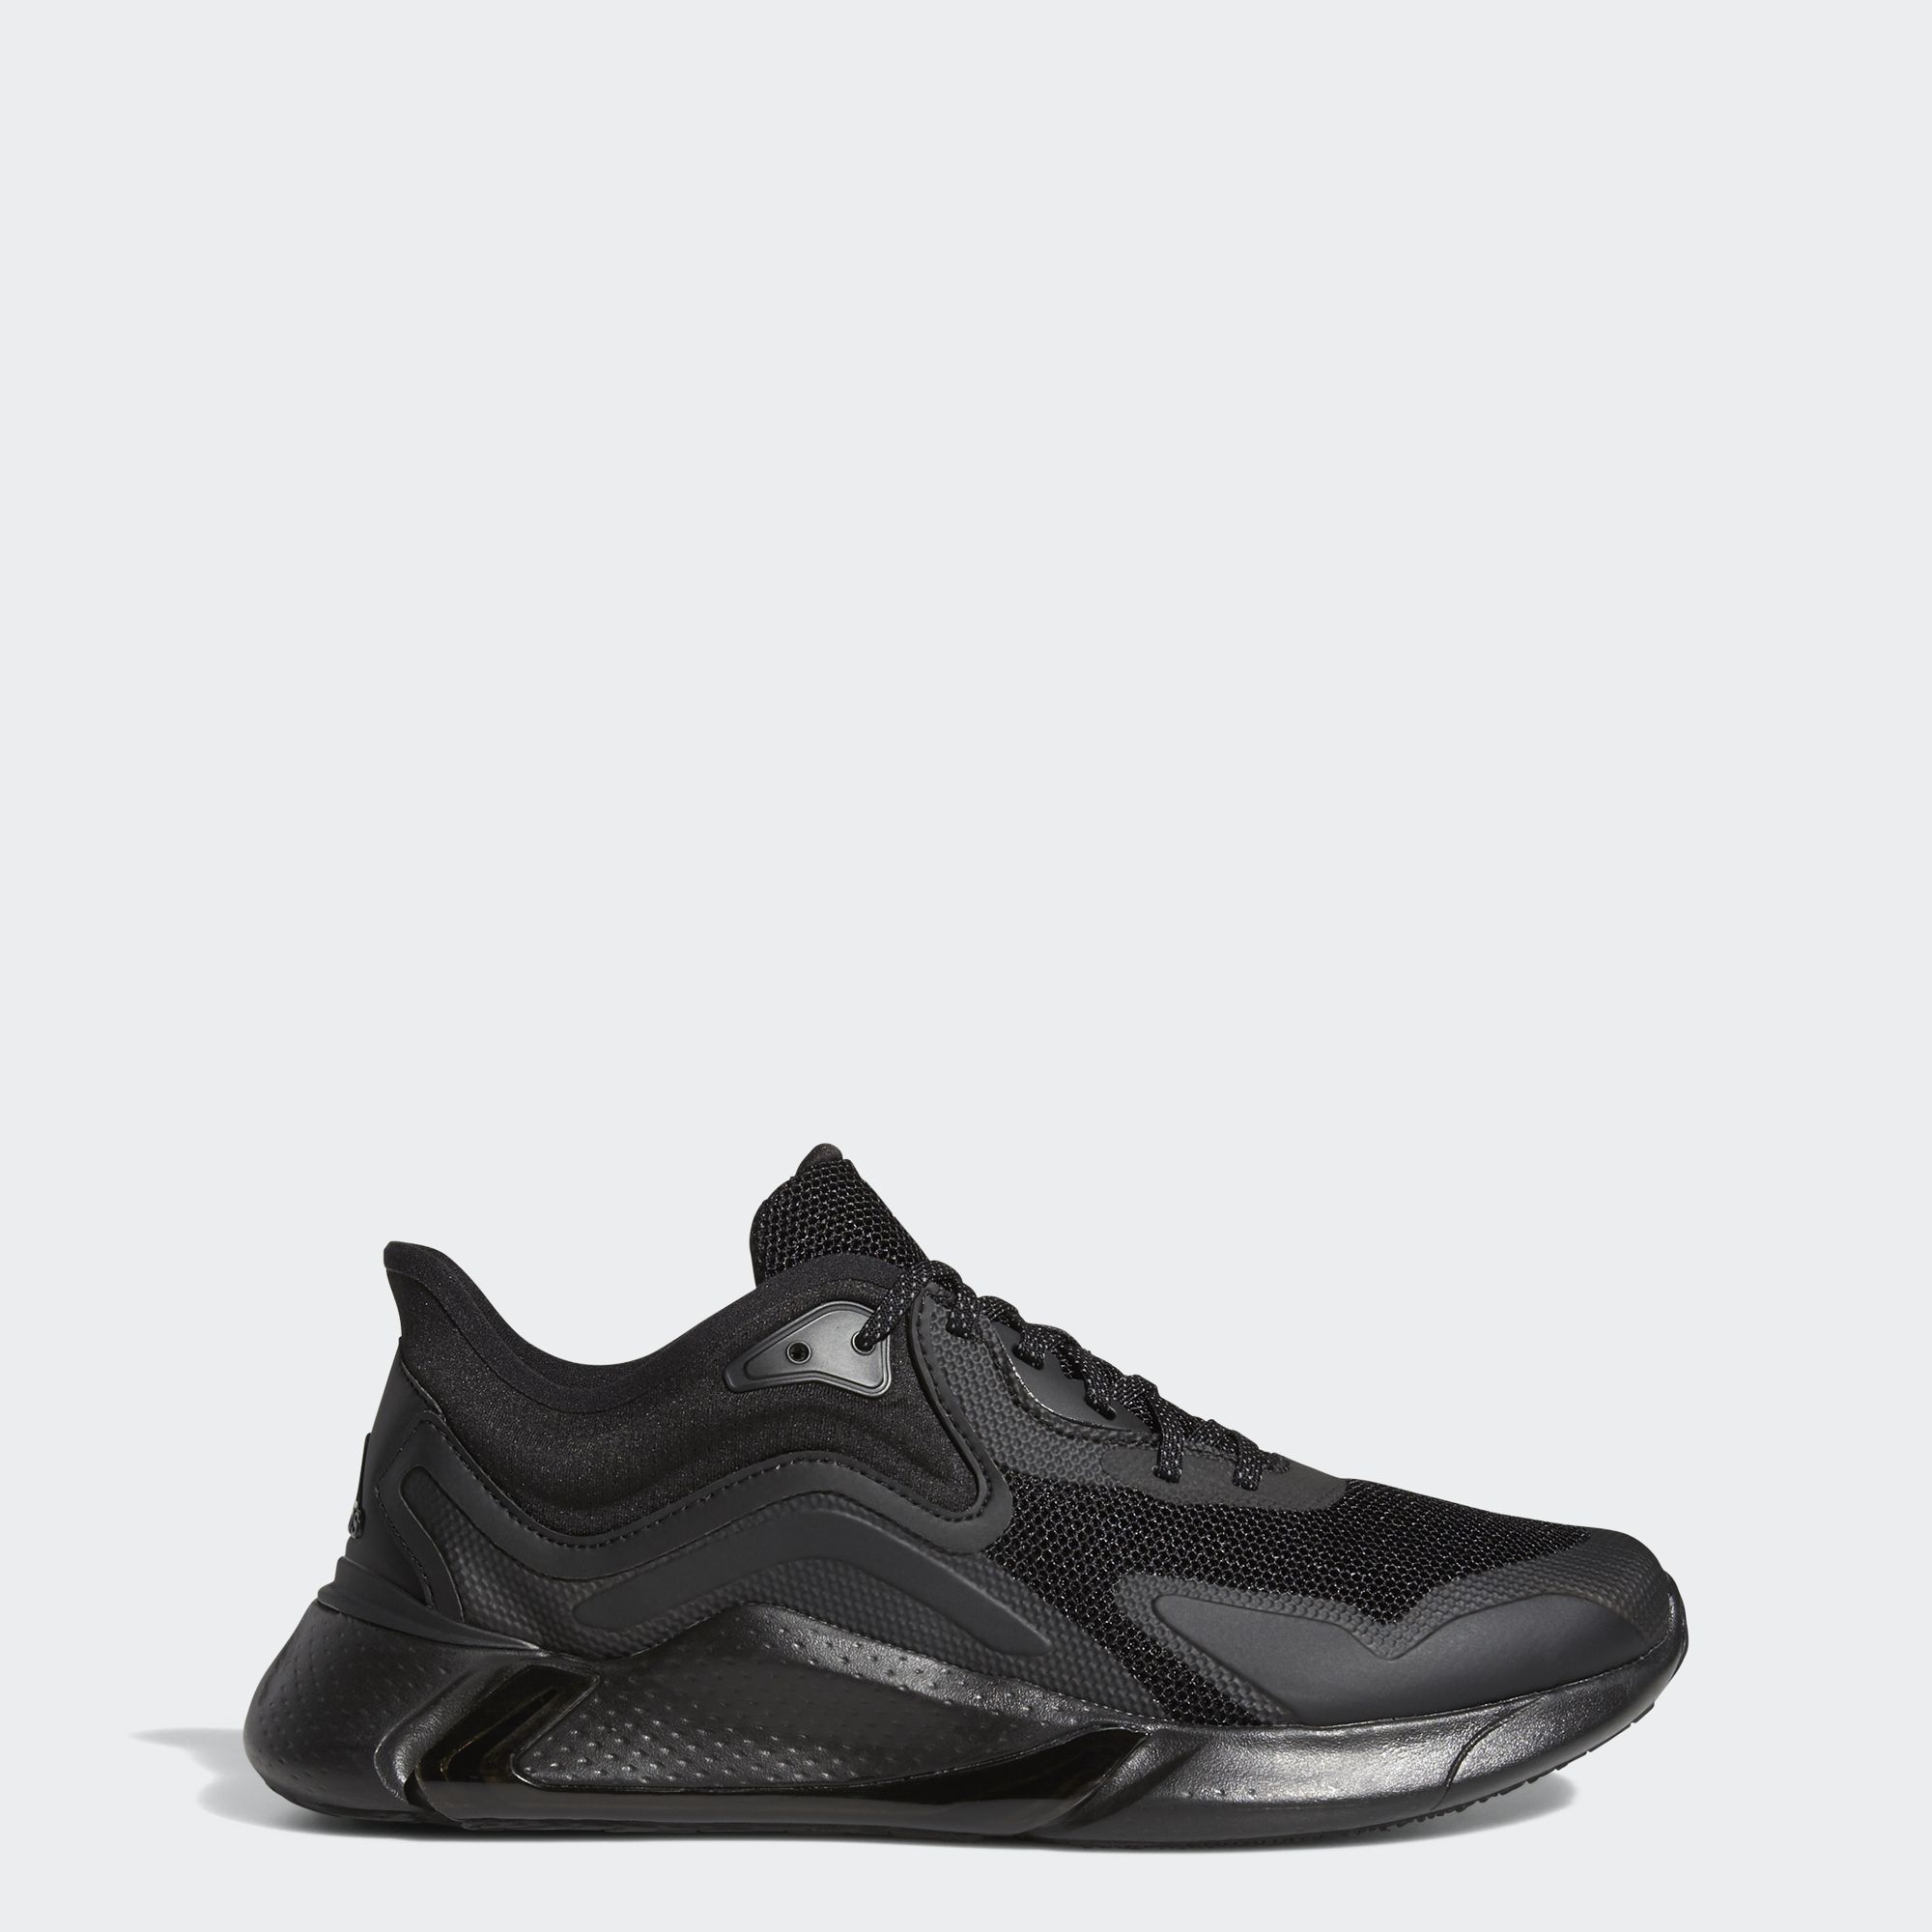 adidas RUNNING รองเท้า Edge XT ผู้ชาย สีดำ FW7229